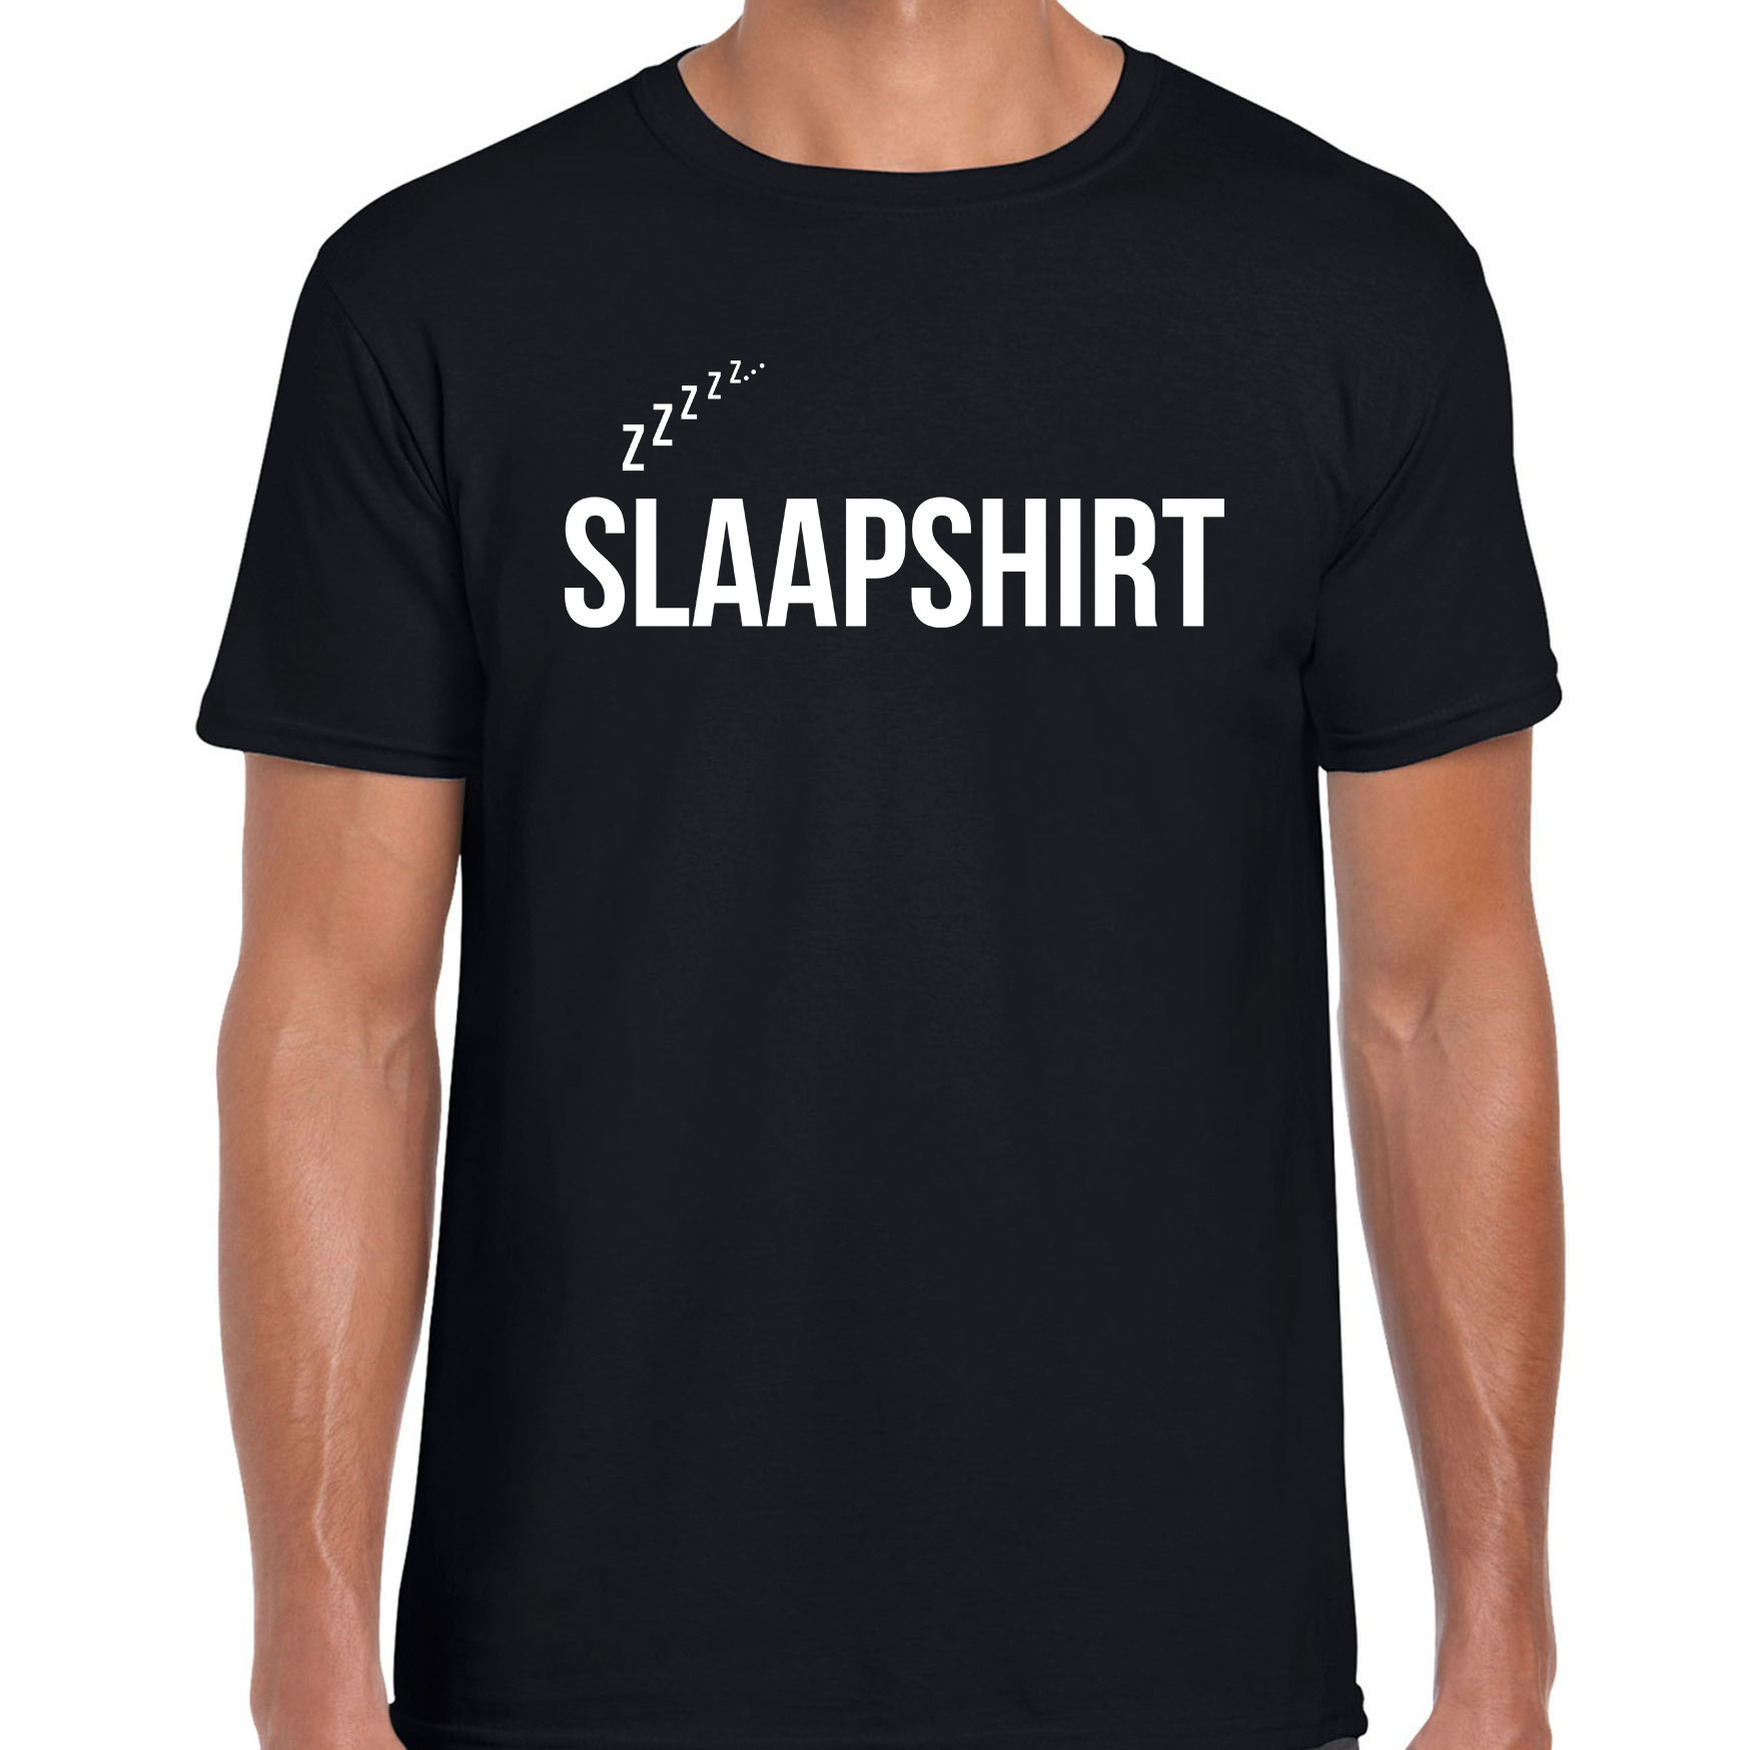 Slaapshirt fun tekst pyjama shirt zwart voor heren Grappig slaapshirt-slaap kleding t-shirt